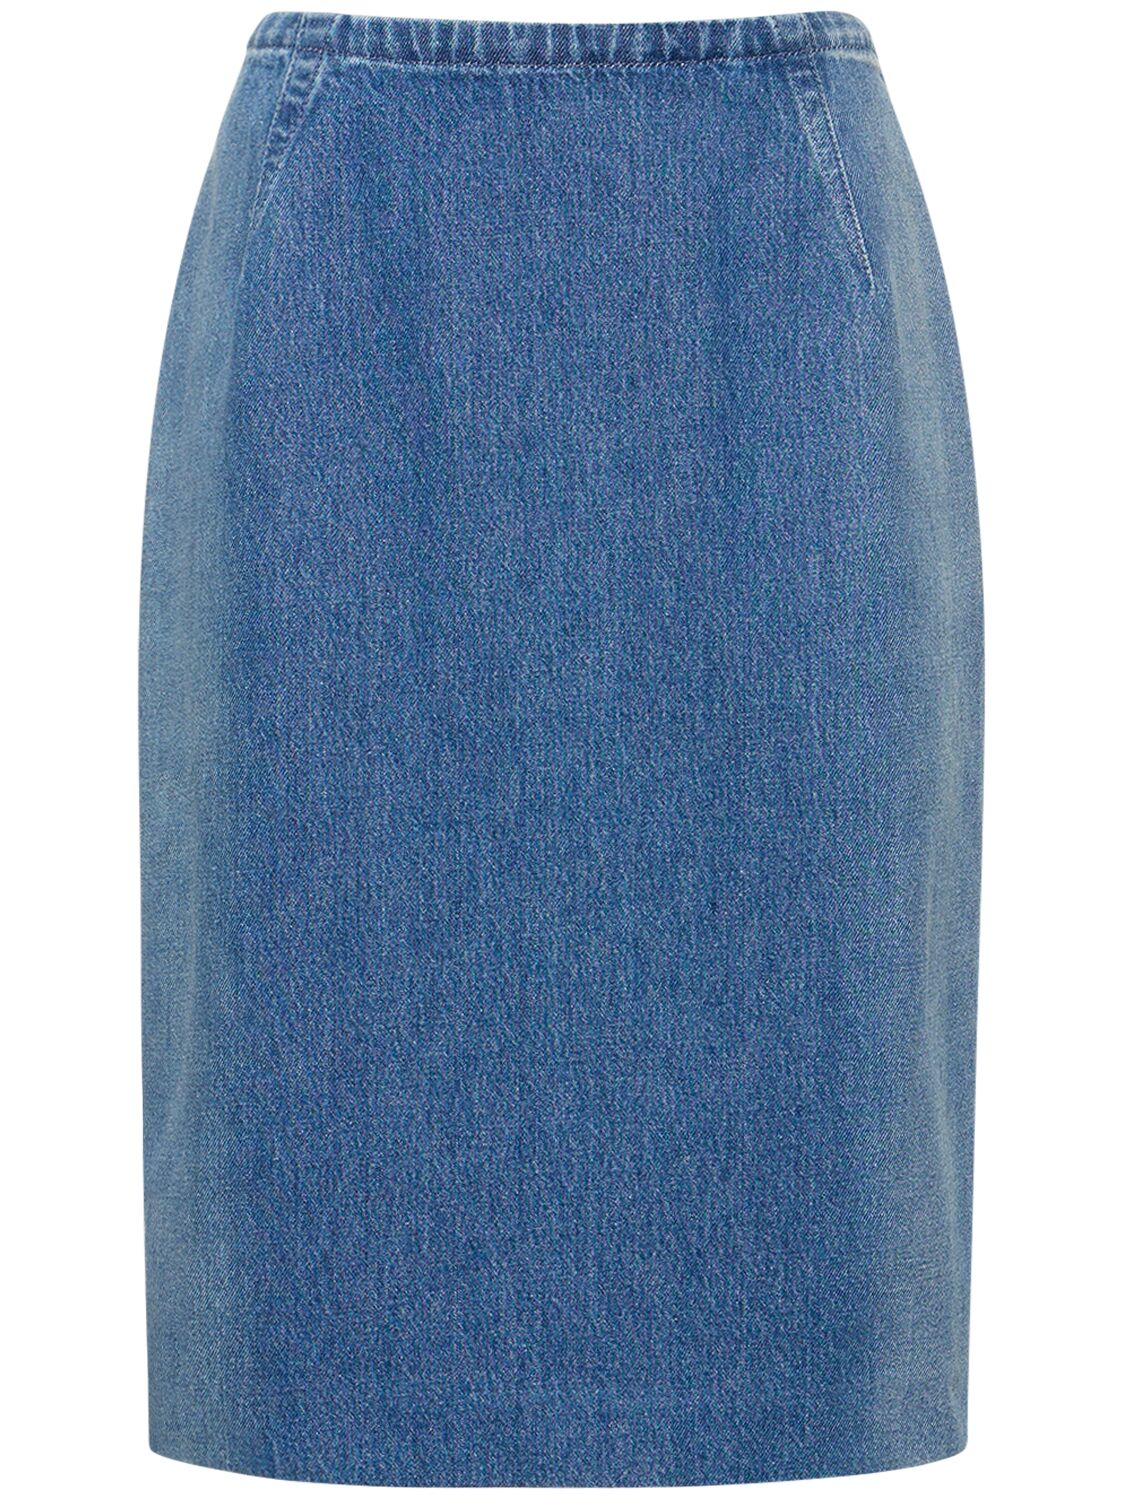 Image of Denim Pencil Skirt W/ Back Slit